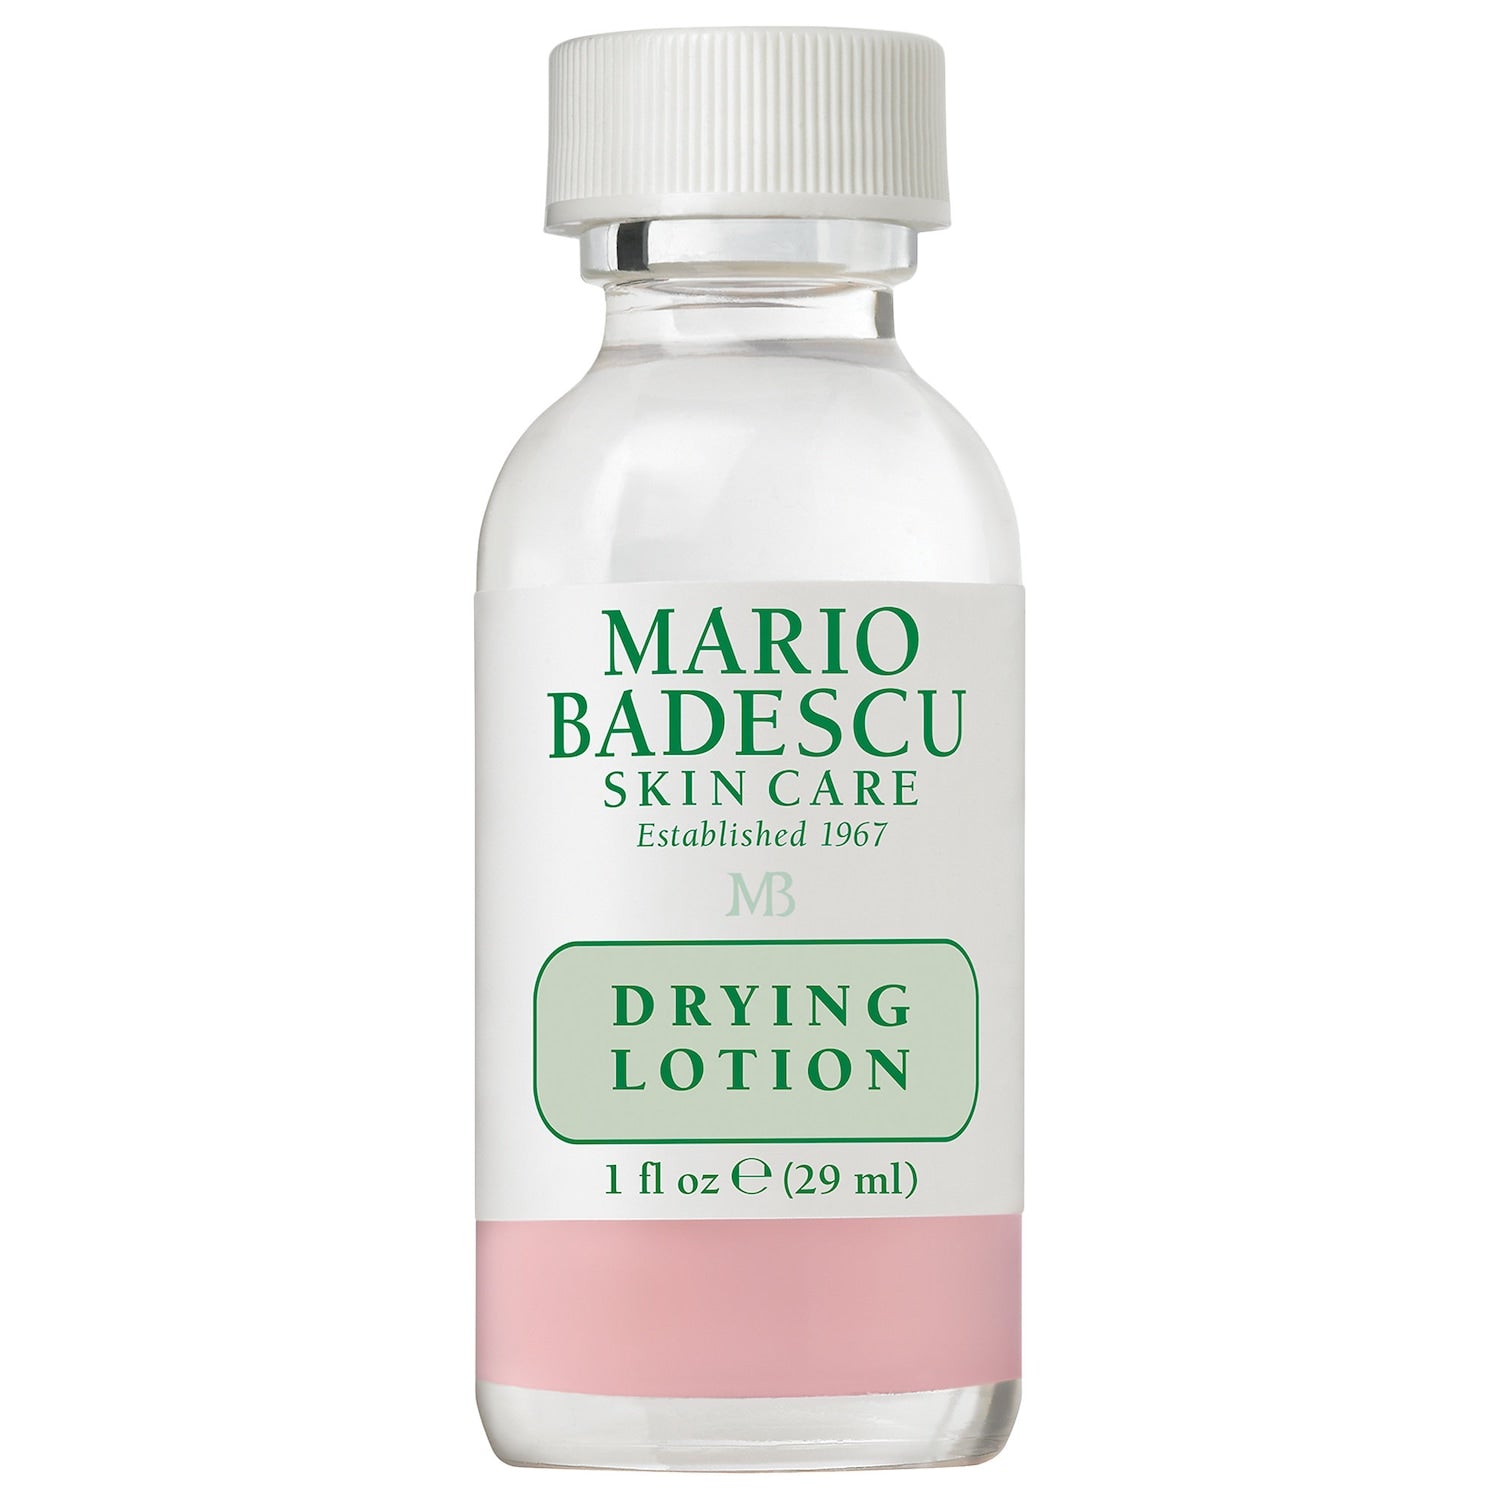 Mario Badescu México - Drying Lotion | Beauty Box Mérida